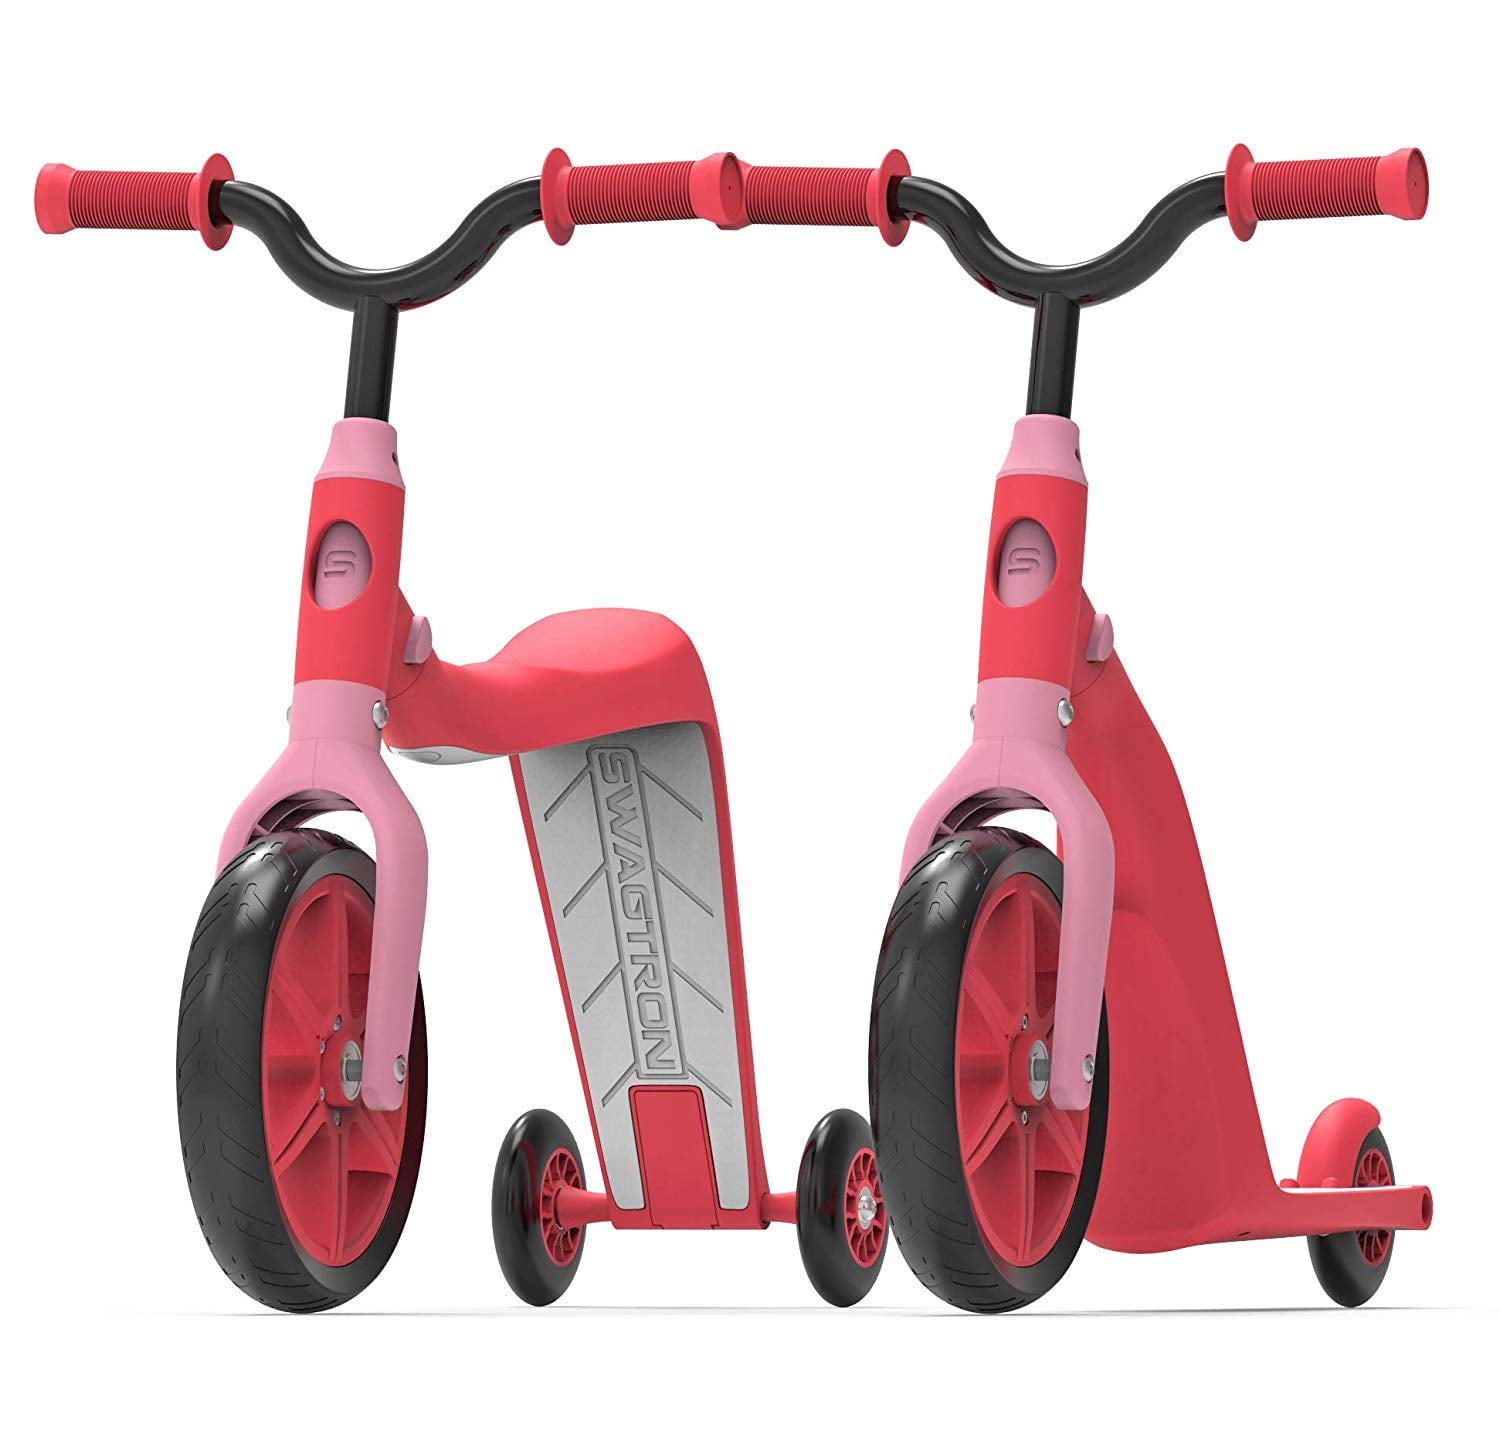 baby scooter bike